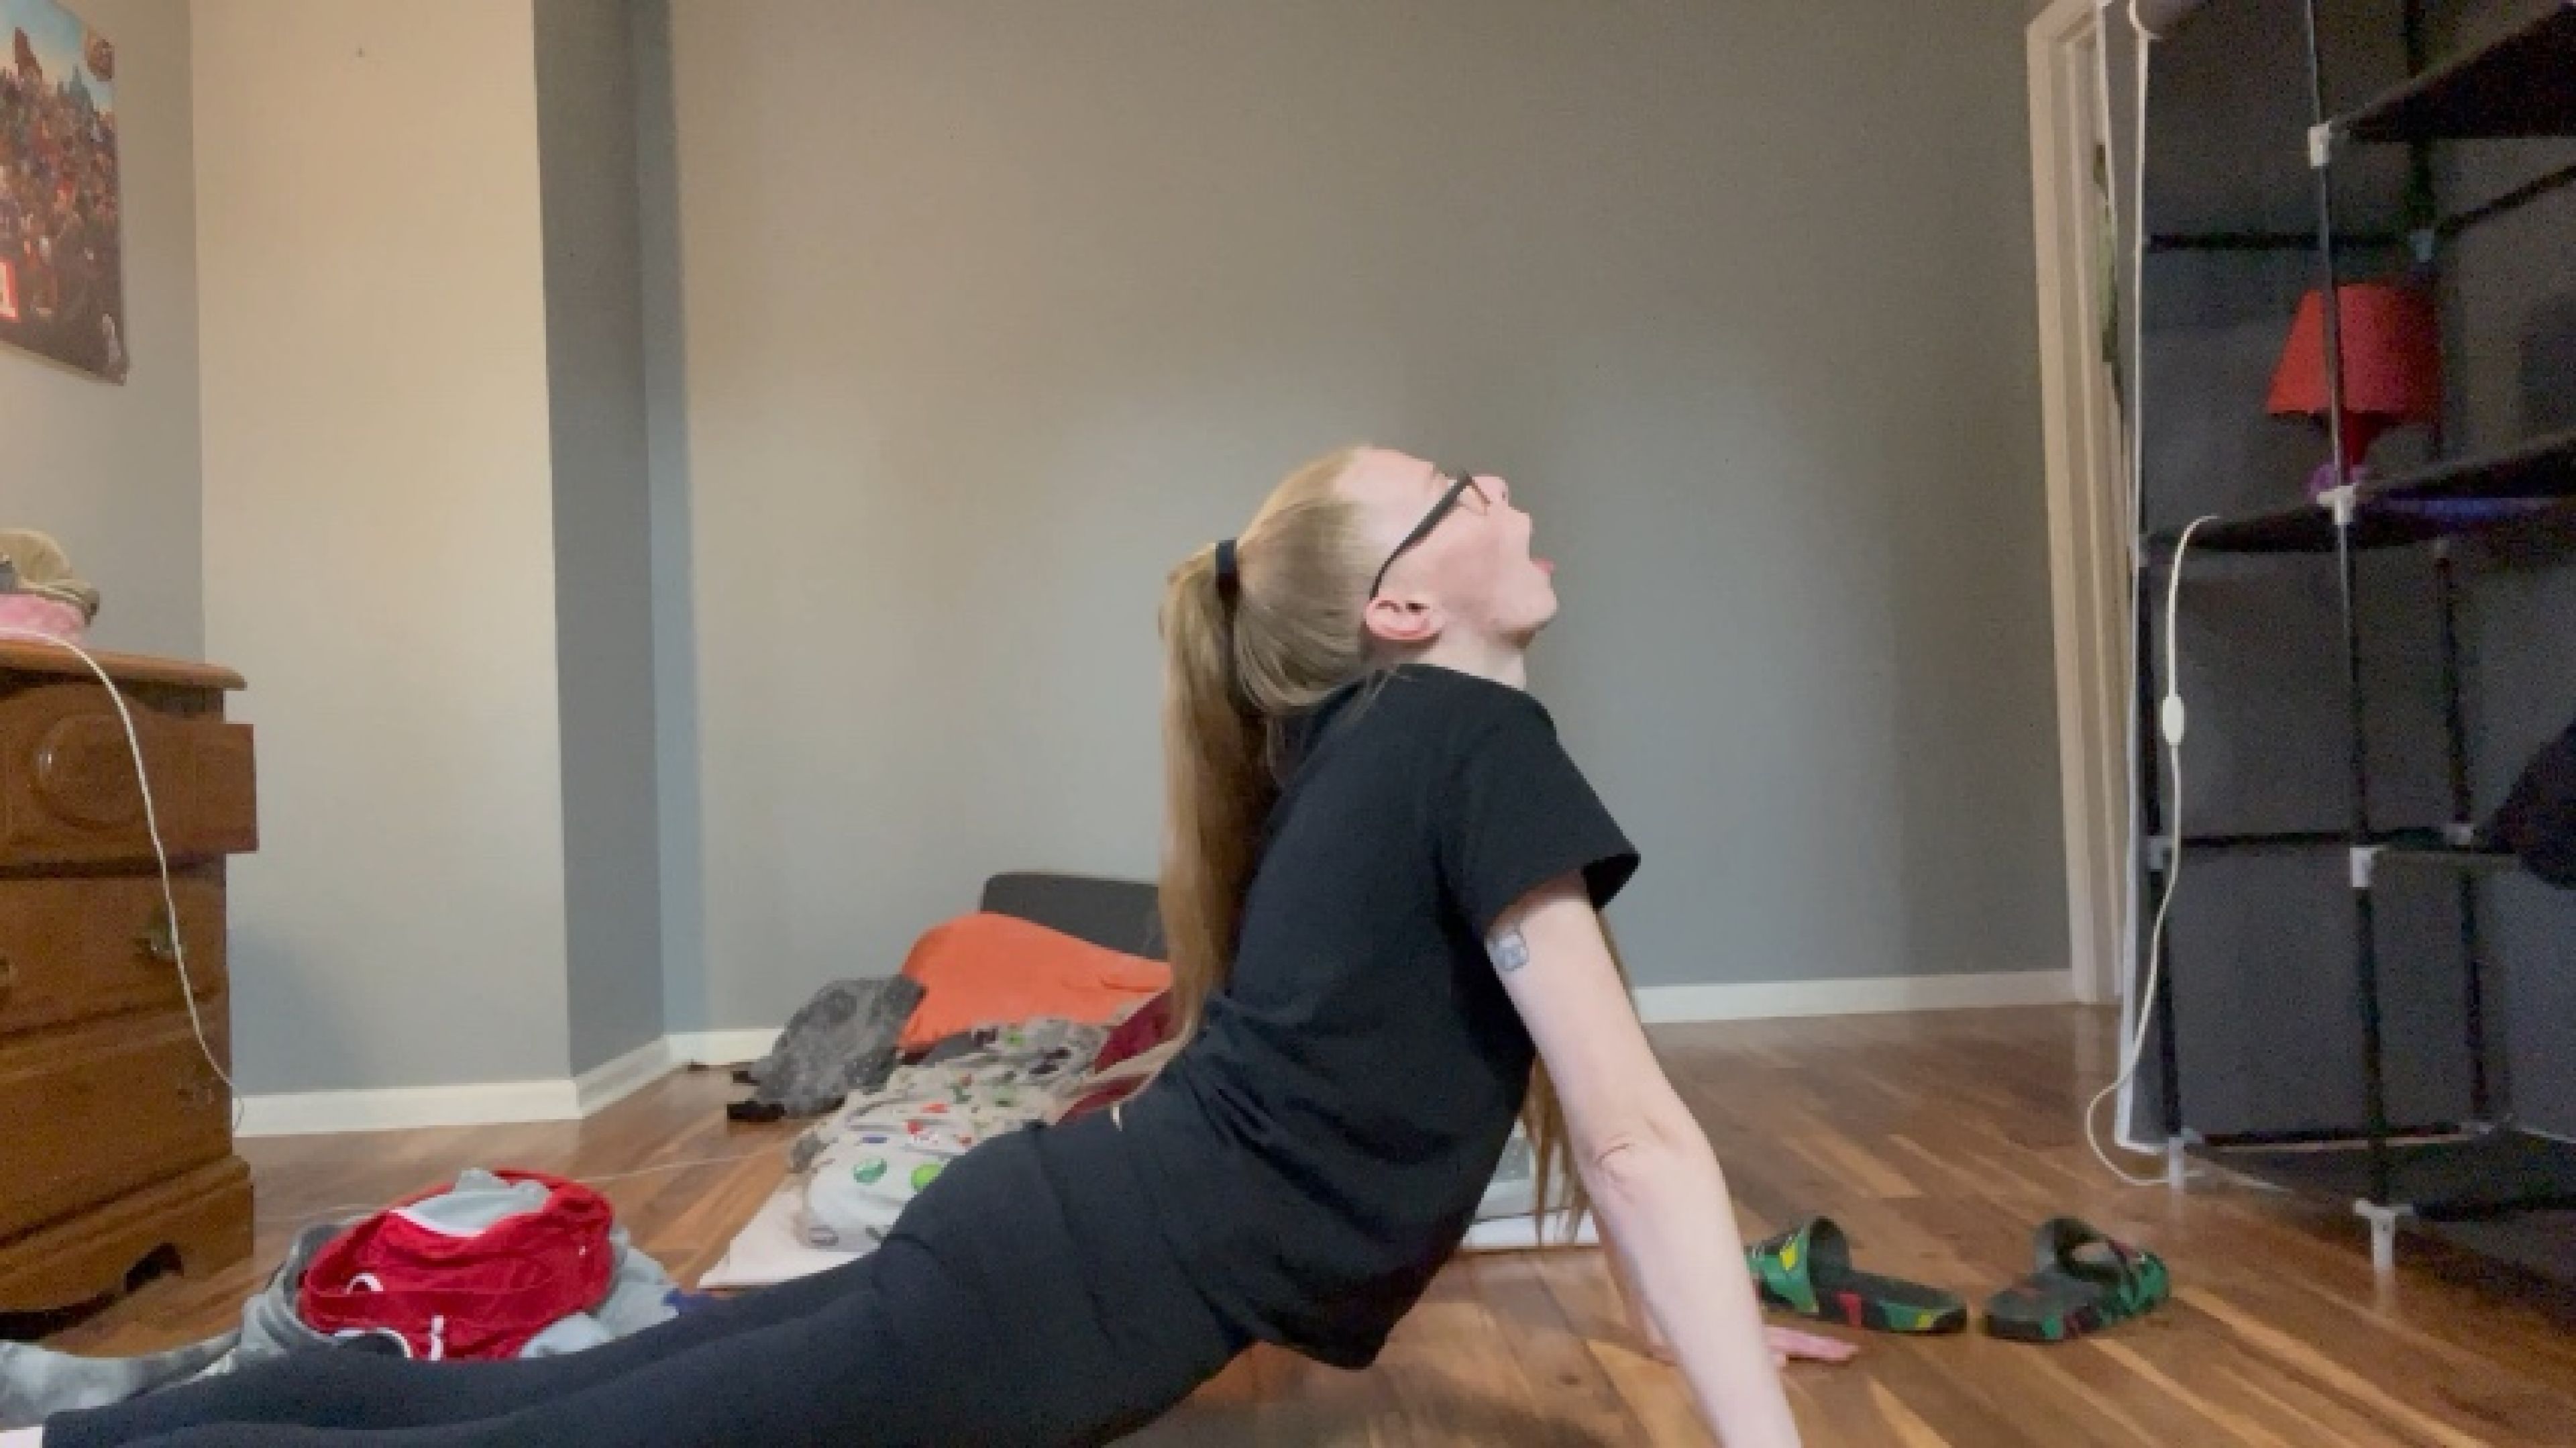 Online Yoga Teacher Cums